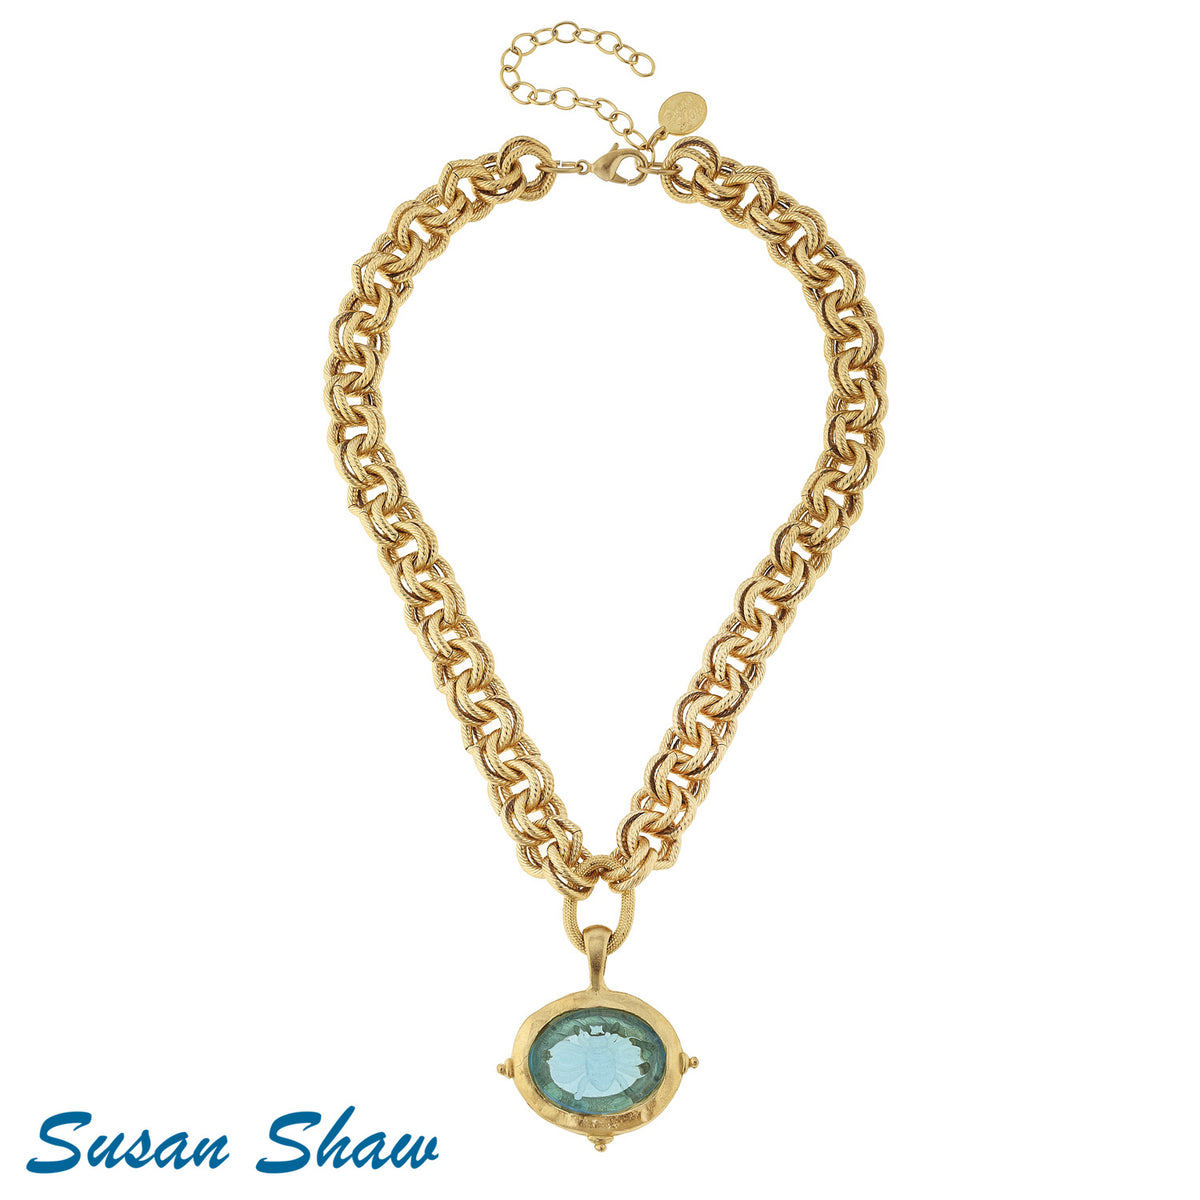 Susan Shaw Necklace: Aqua Venetian Glass Bee with Chain